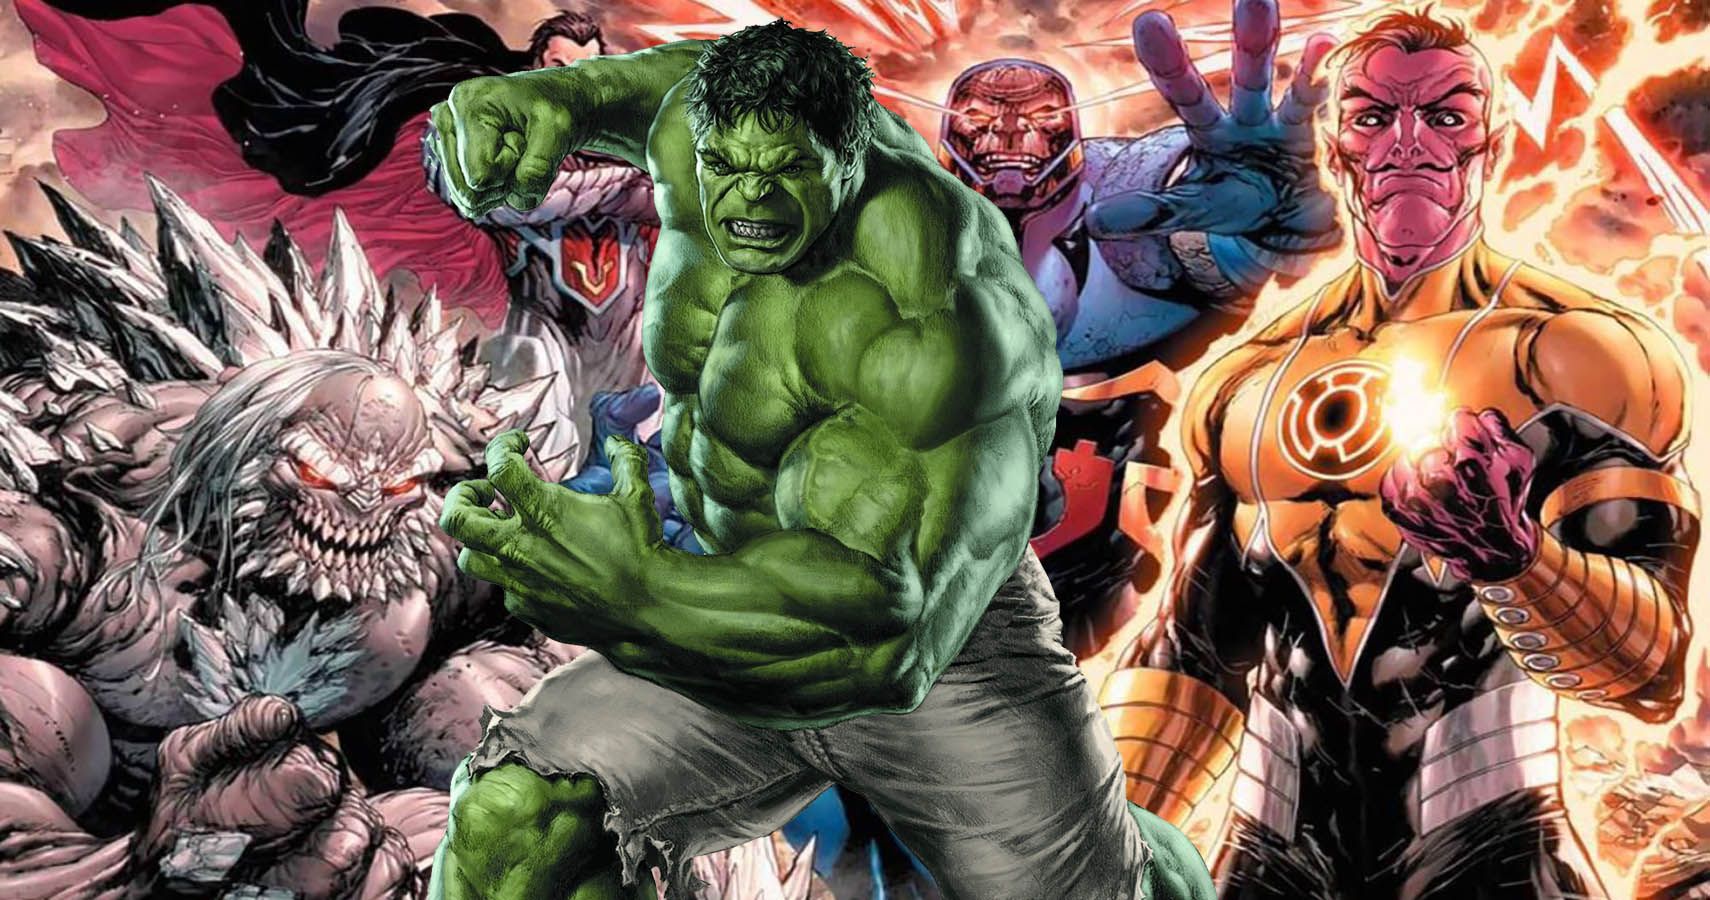 Marvel Avengers Bend And Flex Hulk, 6-Inch Action Figure, Blast Accessory -  Walmart.com